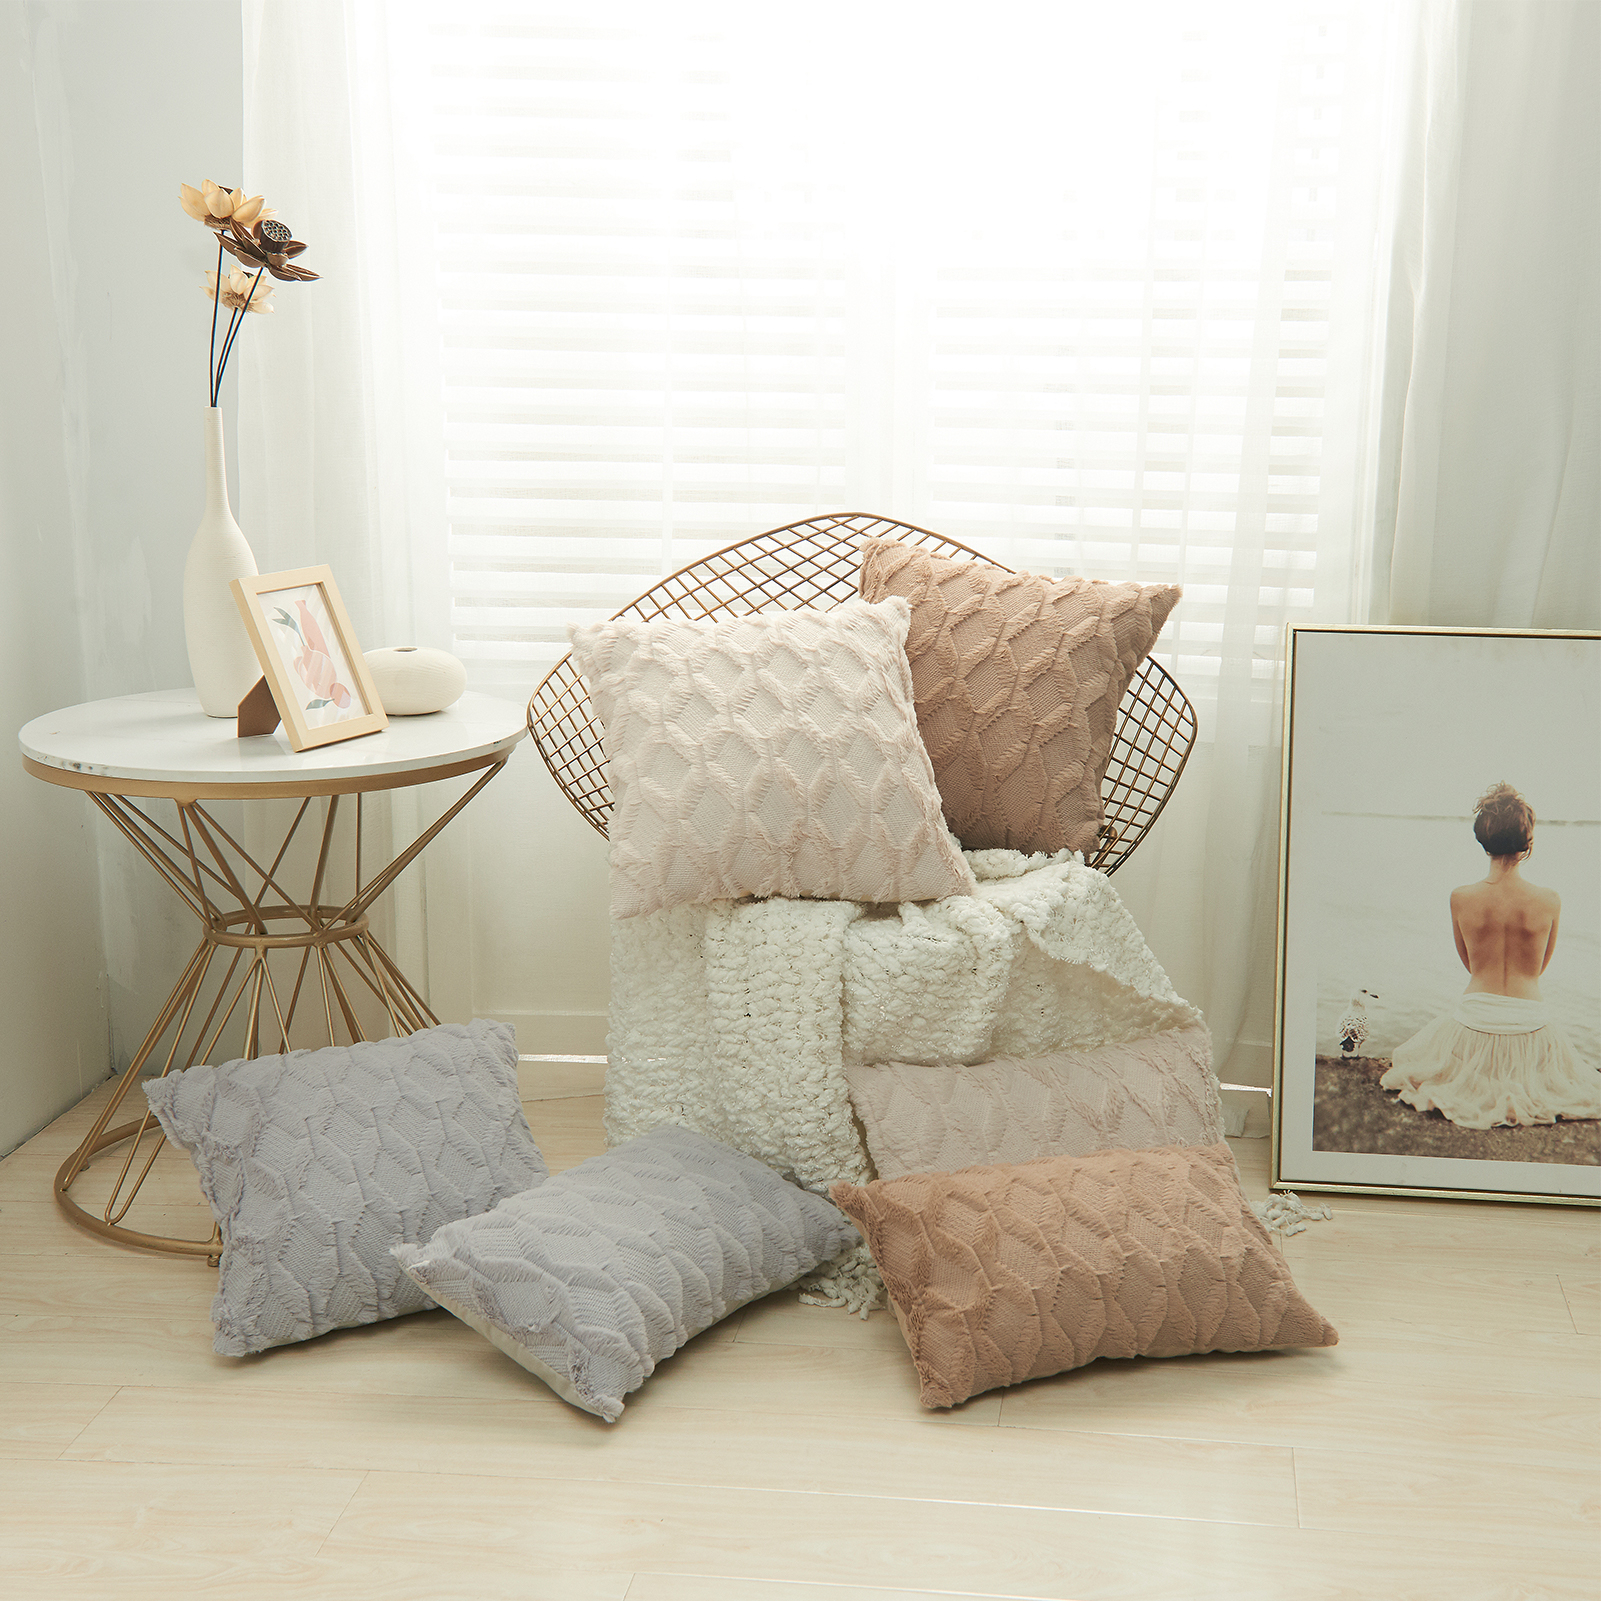 Letters Quote Words Pillowcase Cotton Linen Sofa Waist Cushion Cover Home Decor 